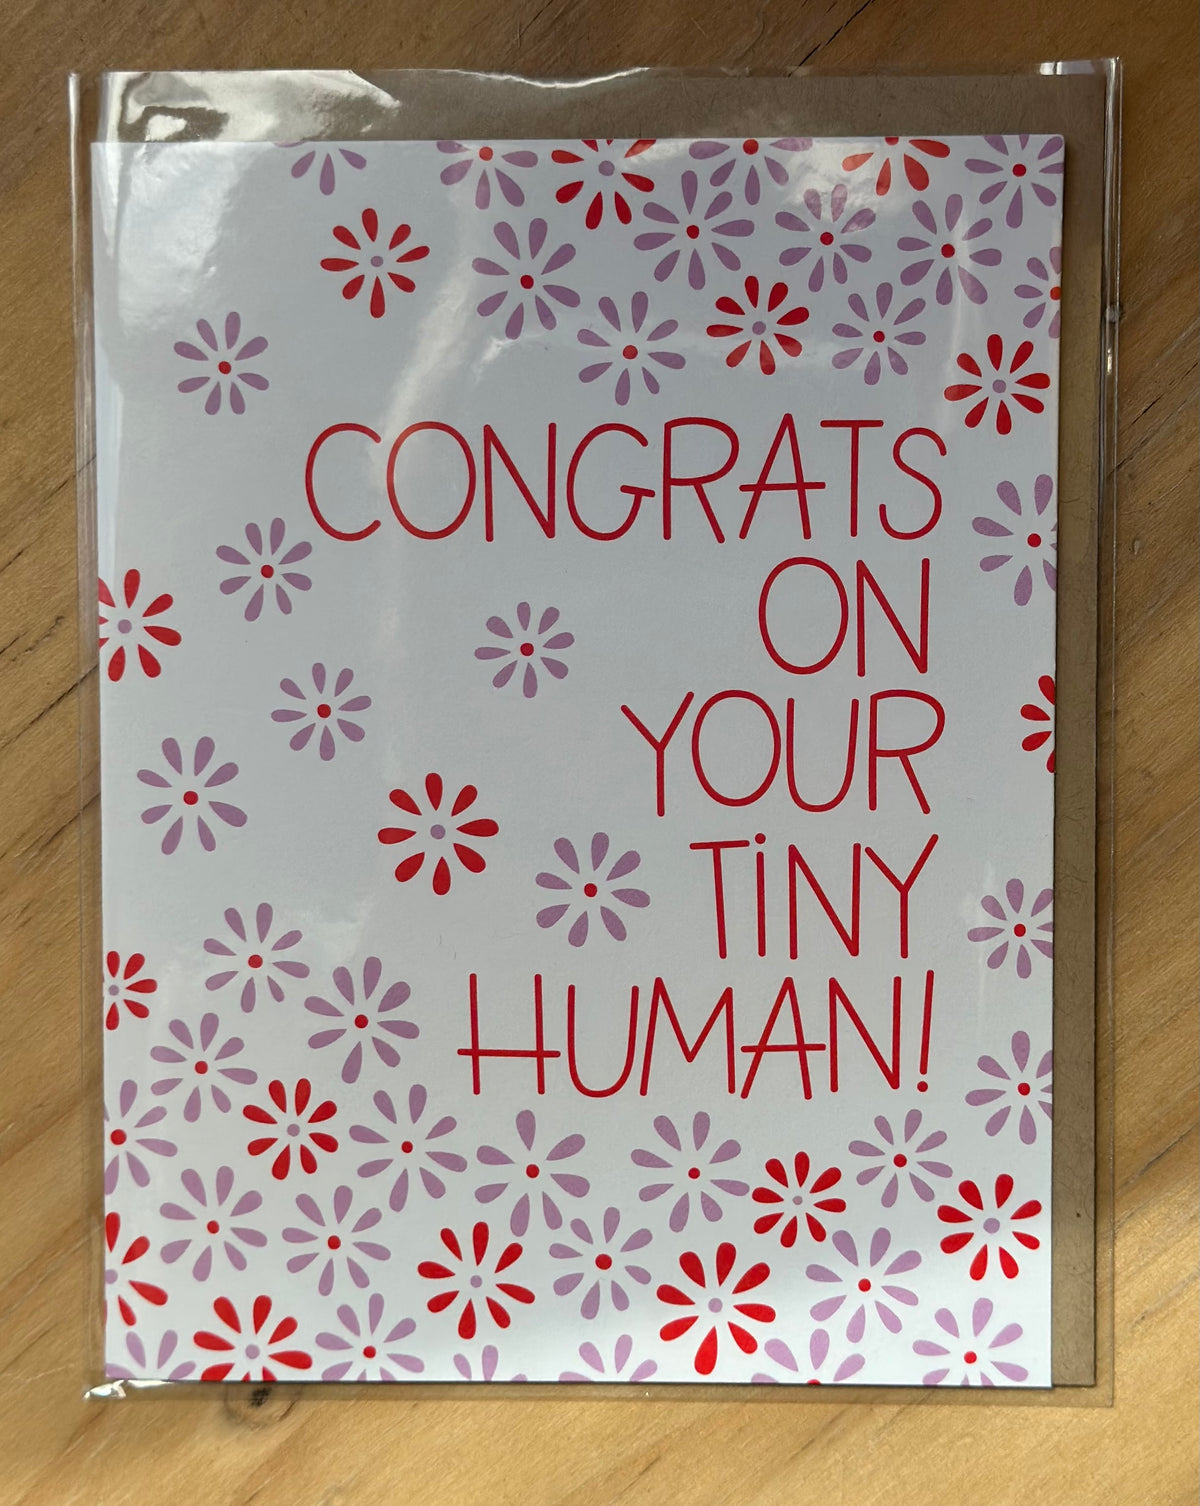 Congrats On Your Tiny Human!